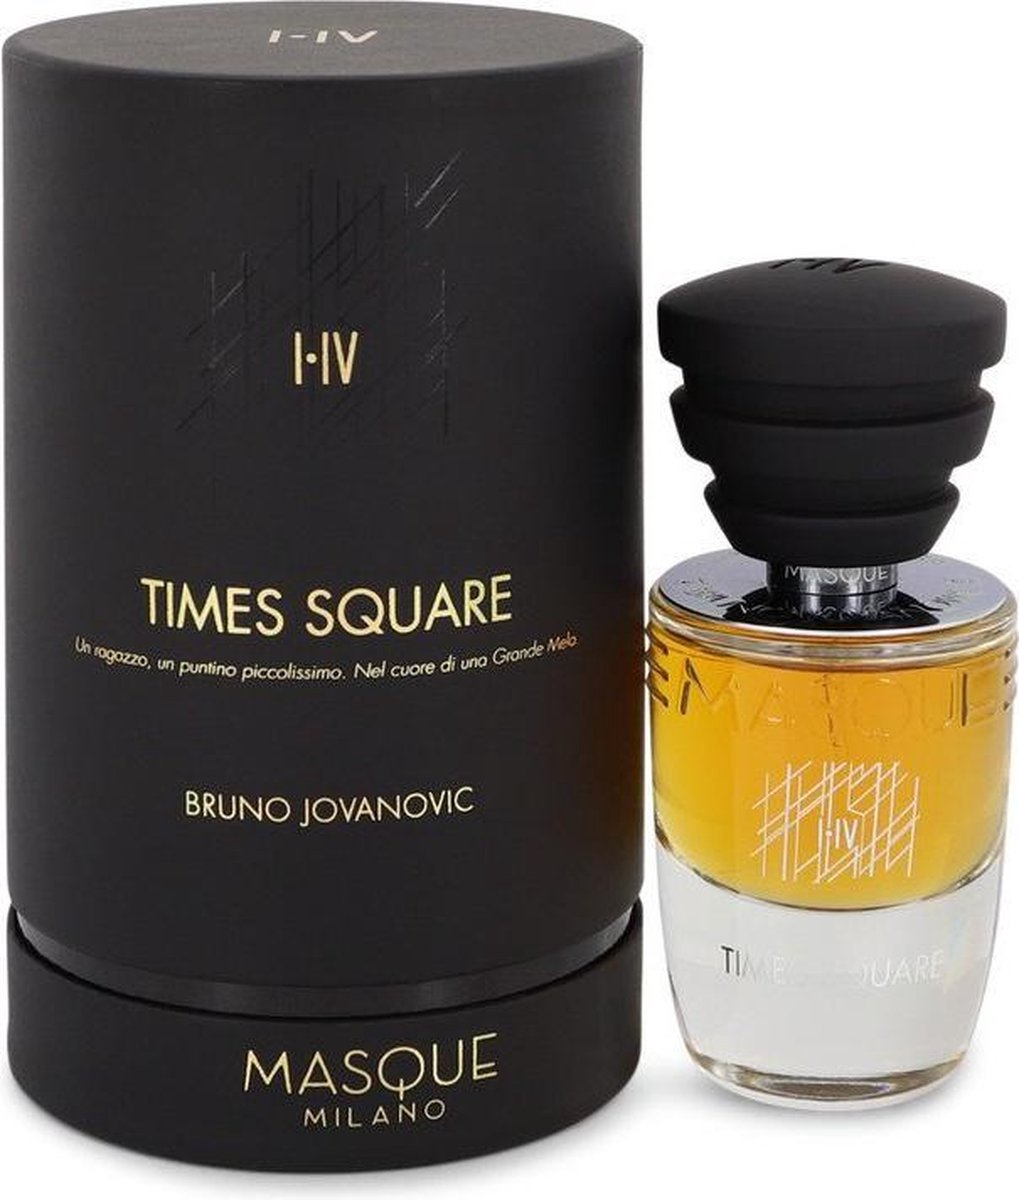 Masque Milano Times Square by Masque Milano 35 ml - Eau De Parfum Spray (Unisex)